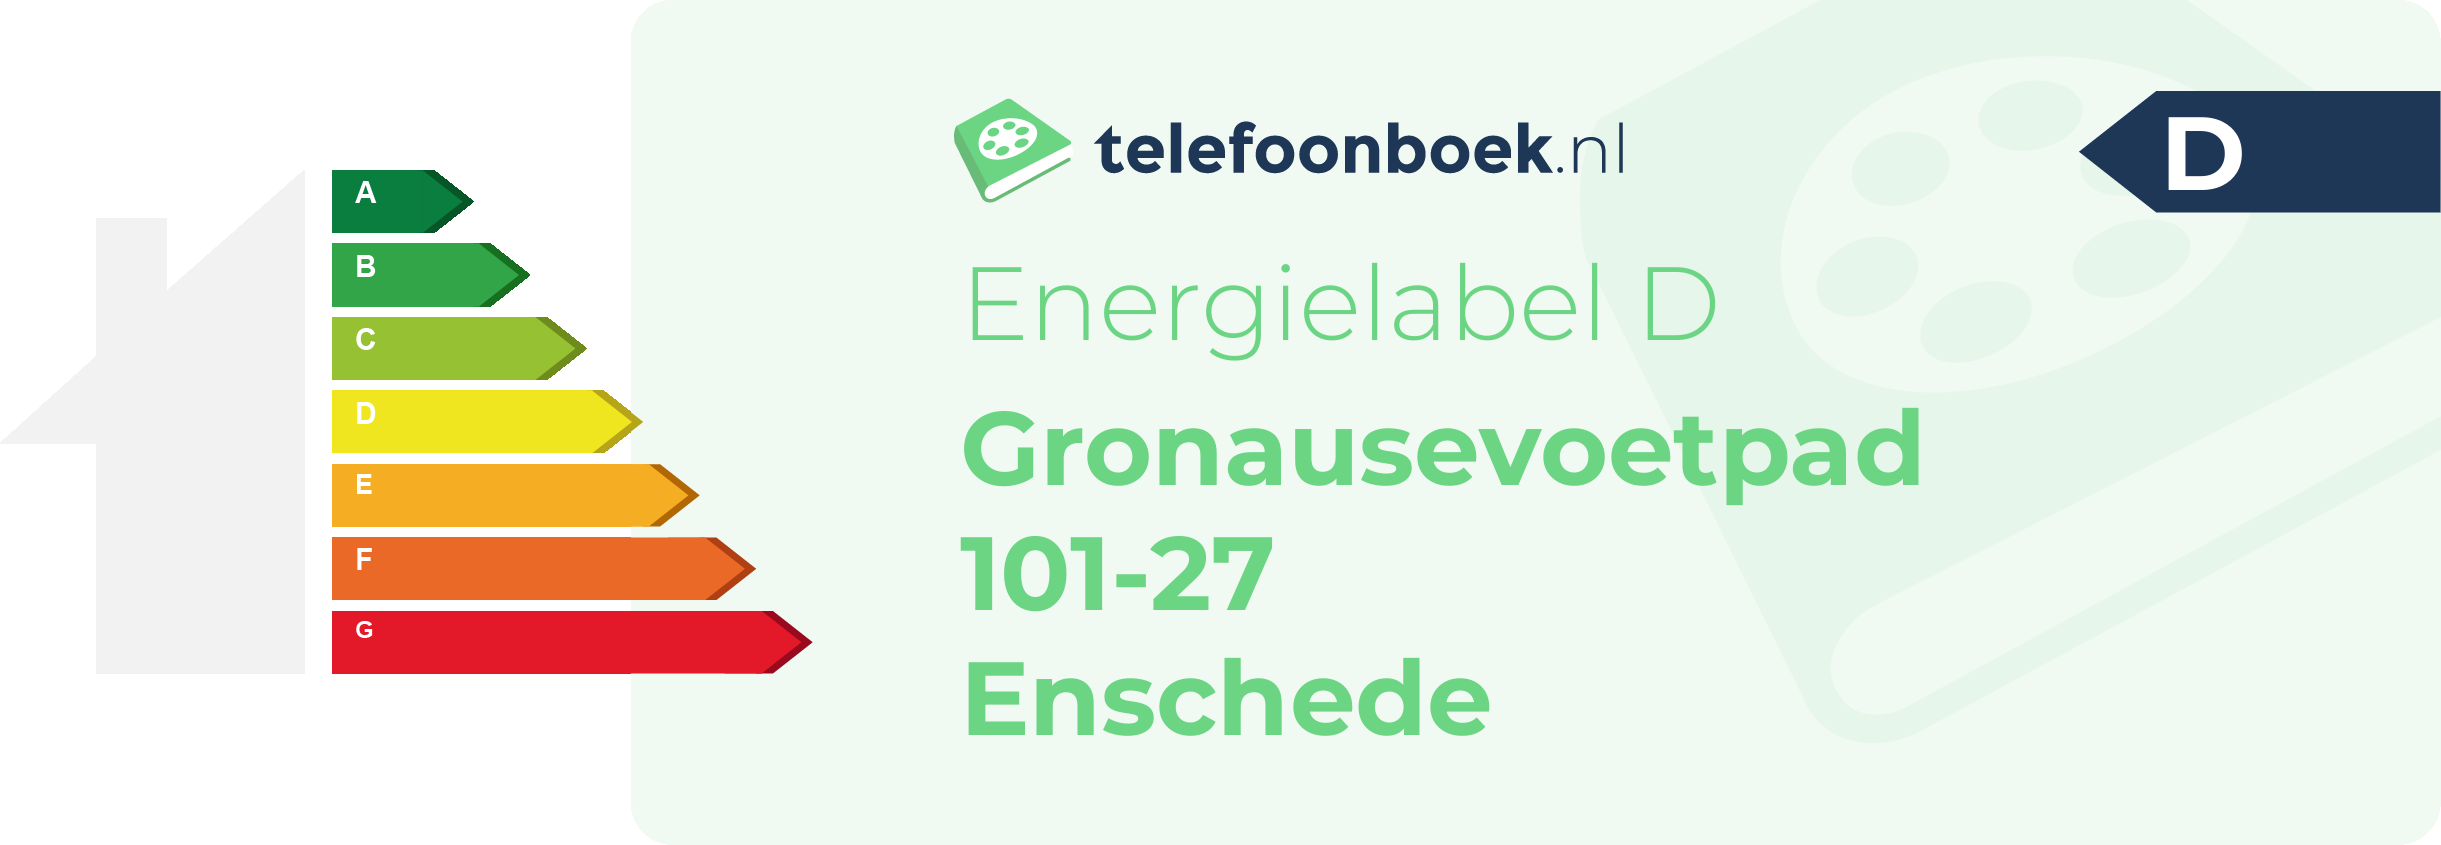 Energielabel Gronausevoetpad 101-27 Enschede